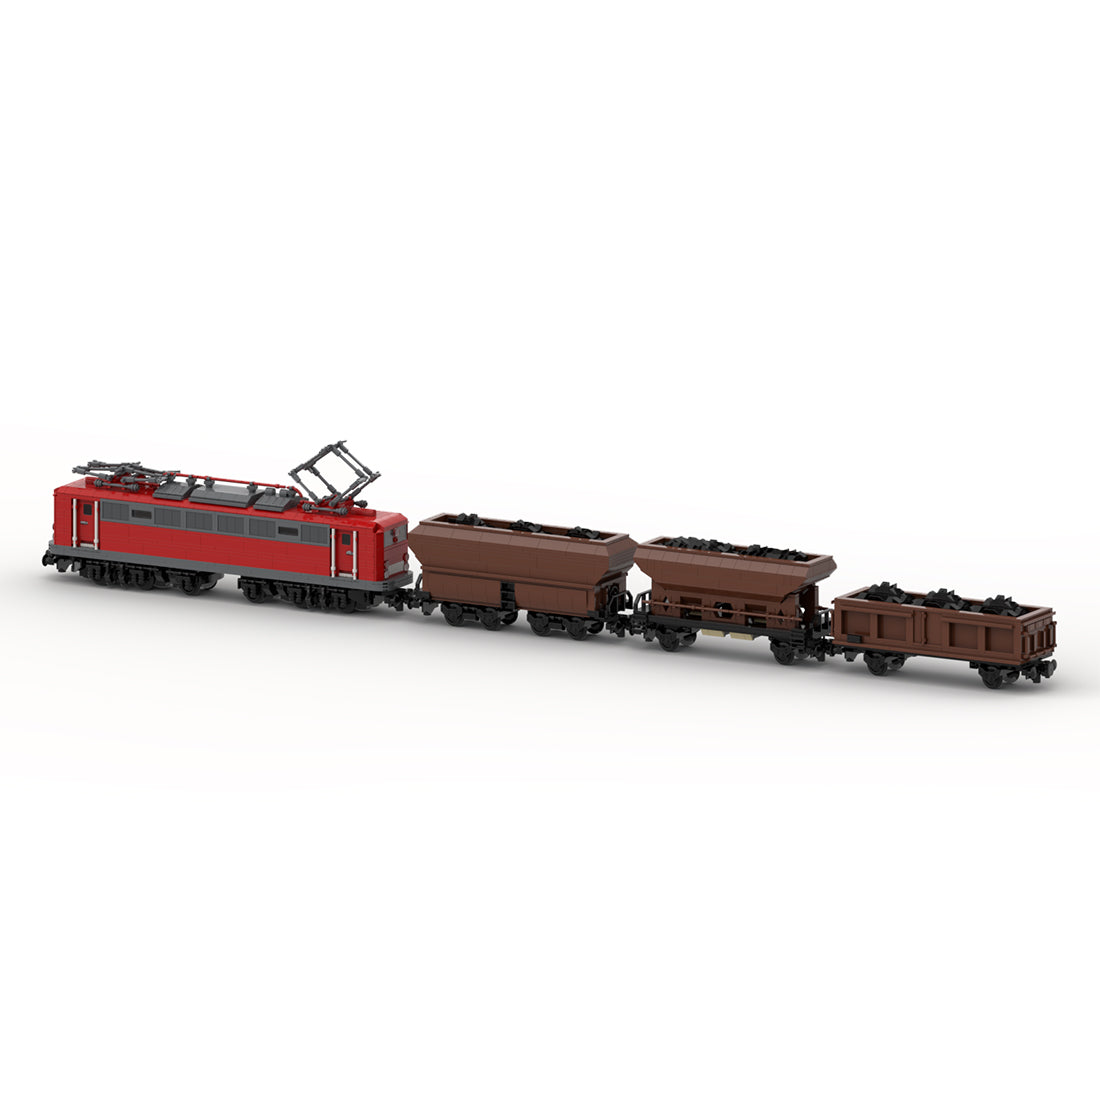 MOC-108963 BR150 Coal Wagon Train Model Building Blocks Toy Set 2377PCS enginediyshop